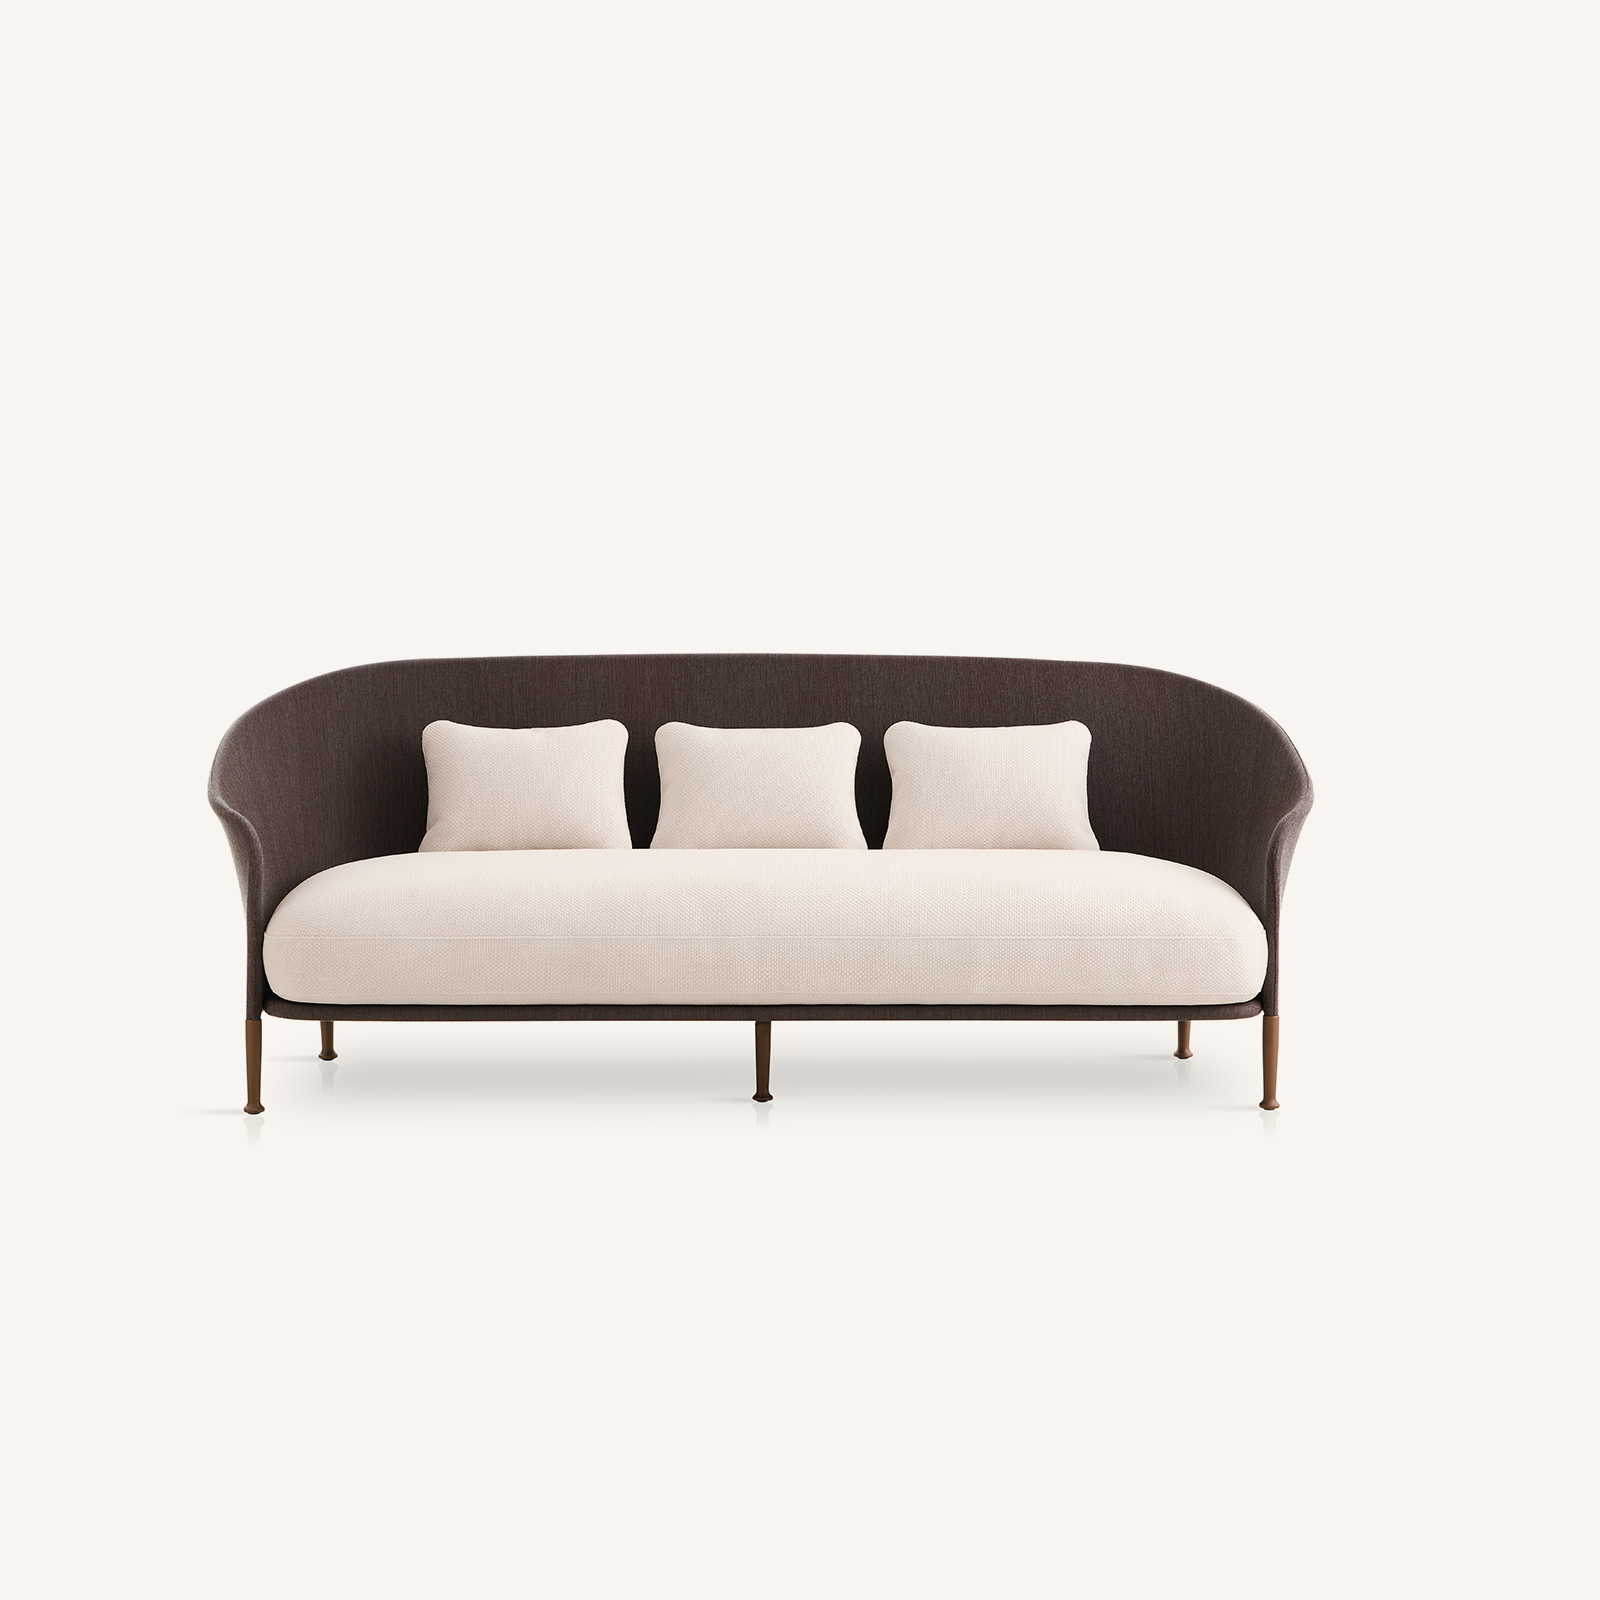 outdoor kollektion - sofas - sofa mit niedriger rückenlehene liz